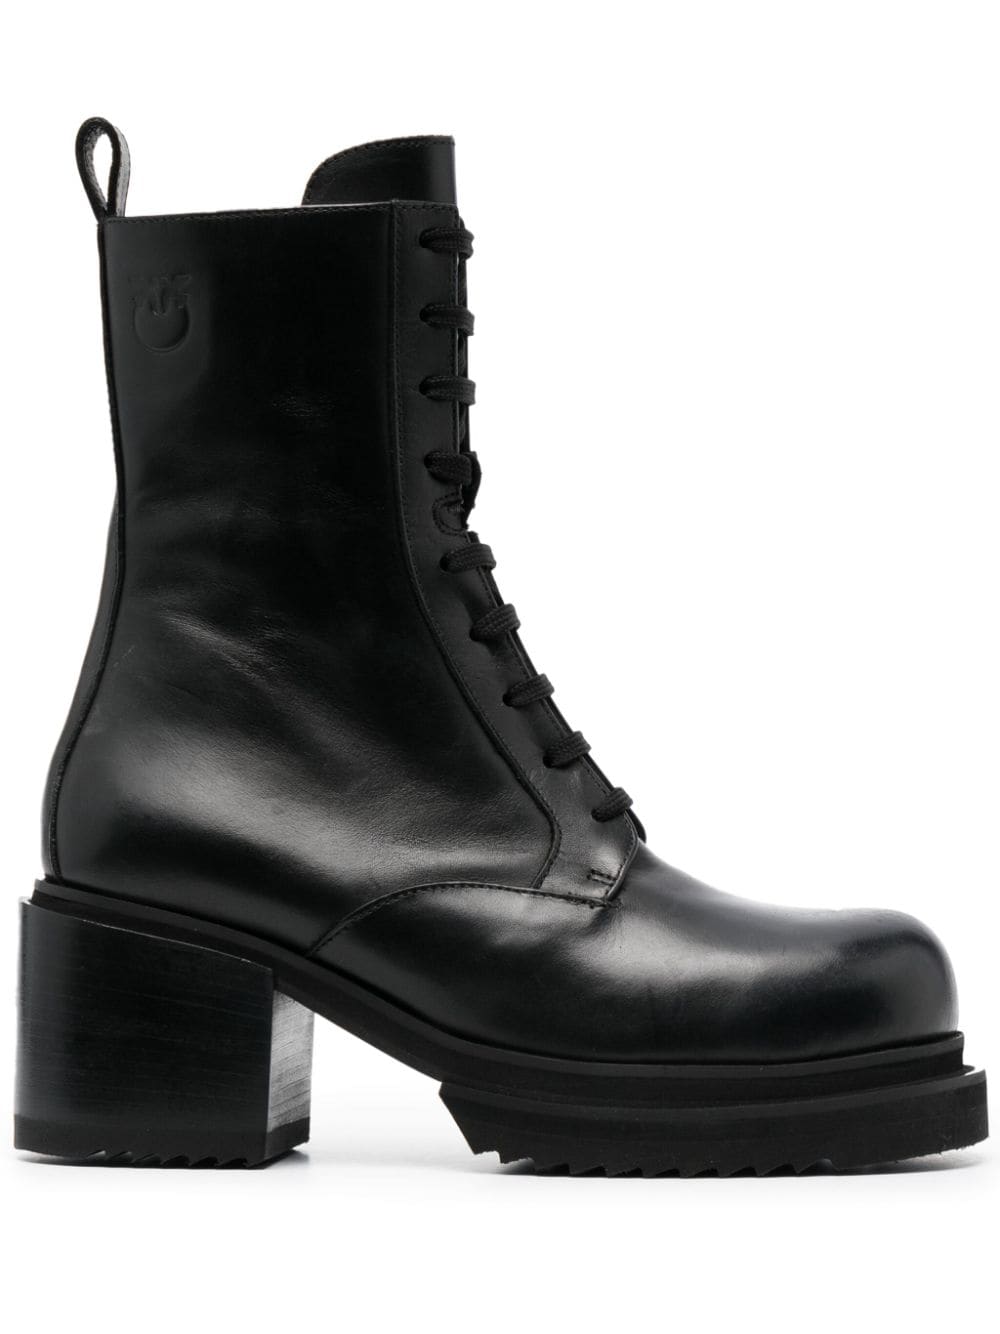 PINKO 70mm leather combat boots - Black von PINKO